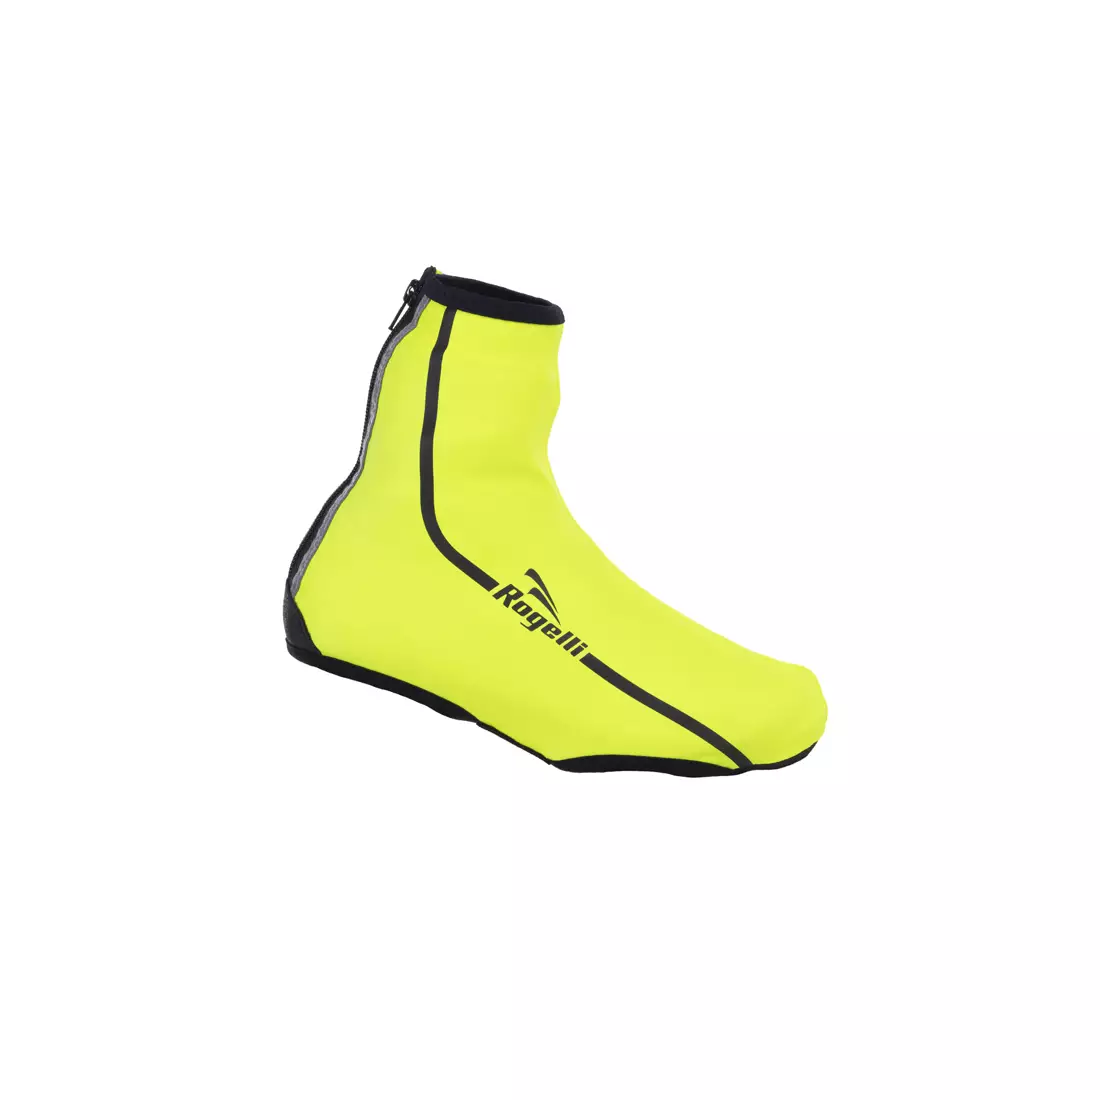 ROGELLI 2sQin neizolované vodotěsné návleky na boty silniční / mtb fluoro žlutá